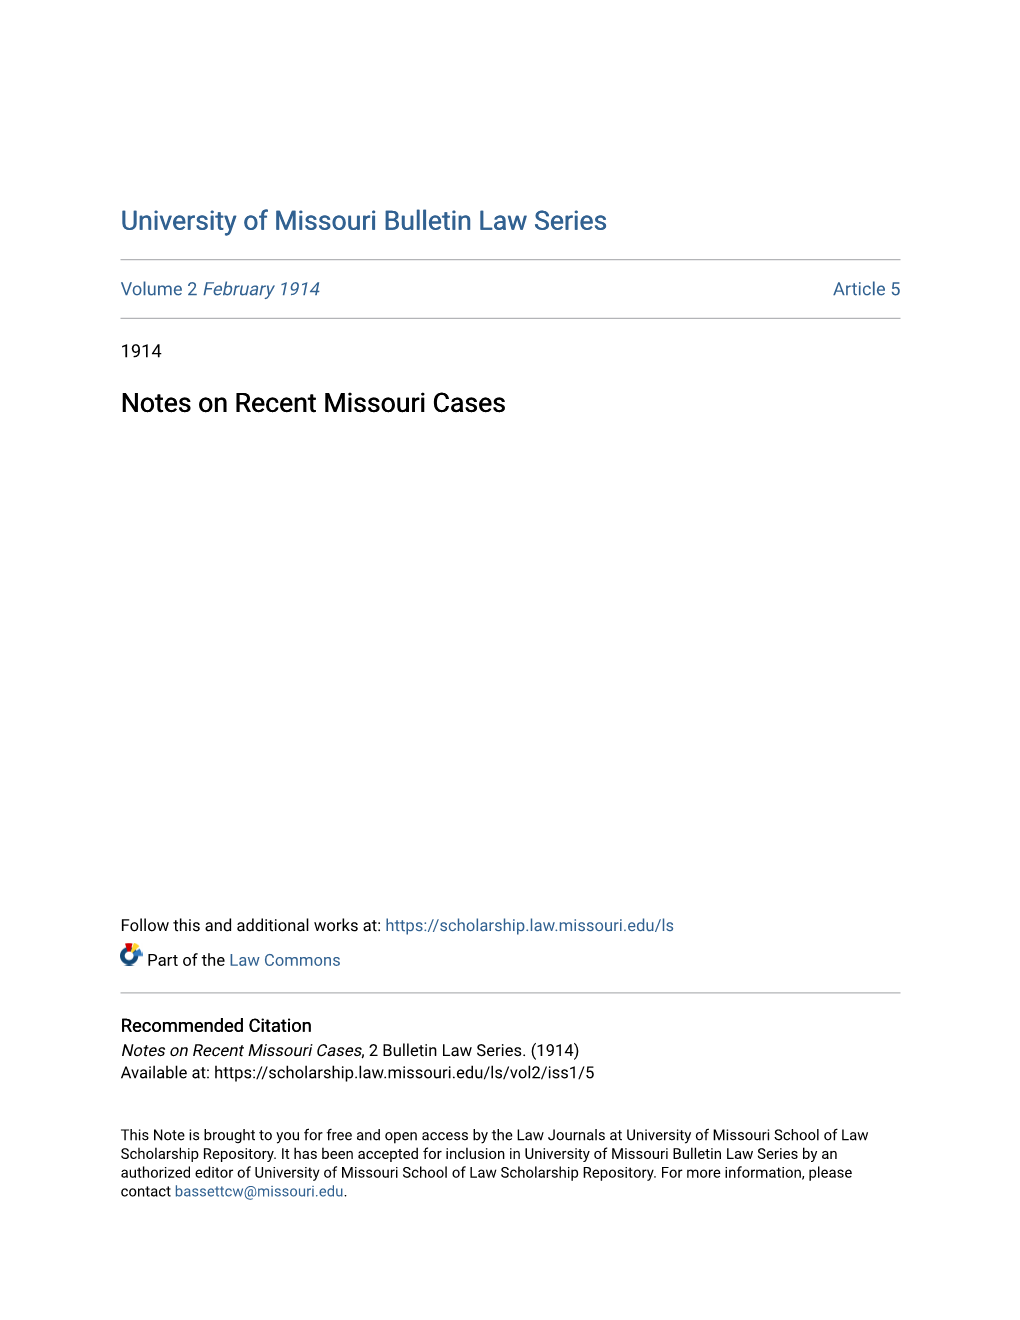 Notes on Recent Missouri Cases